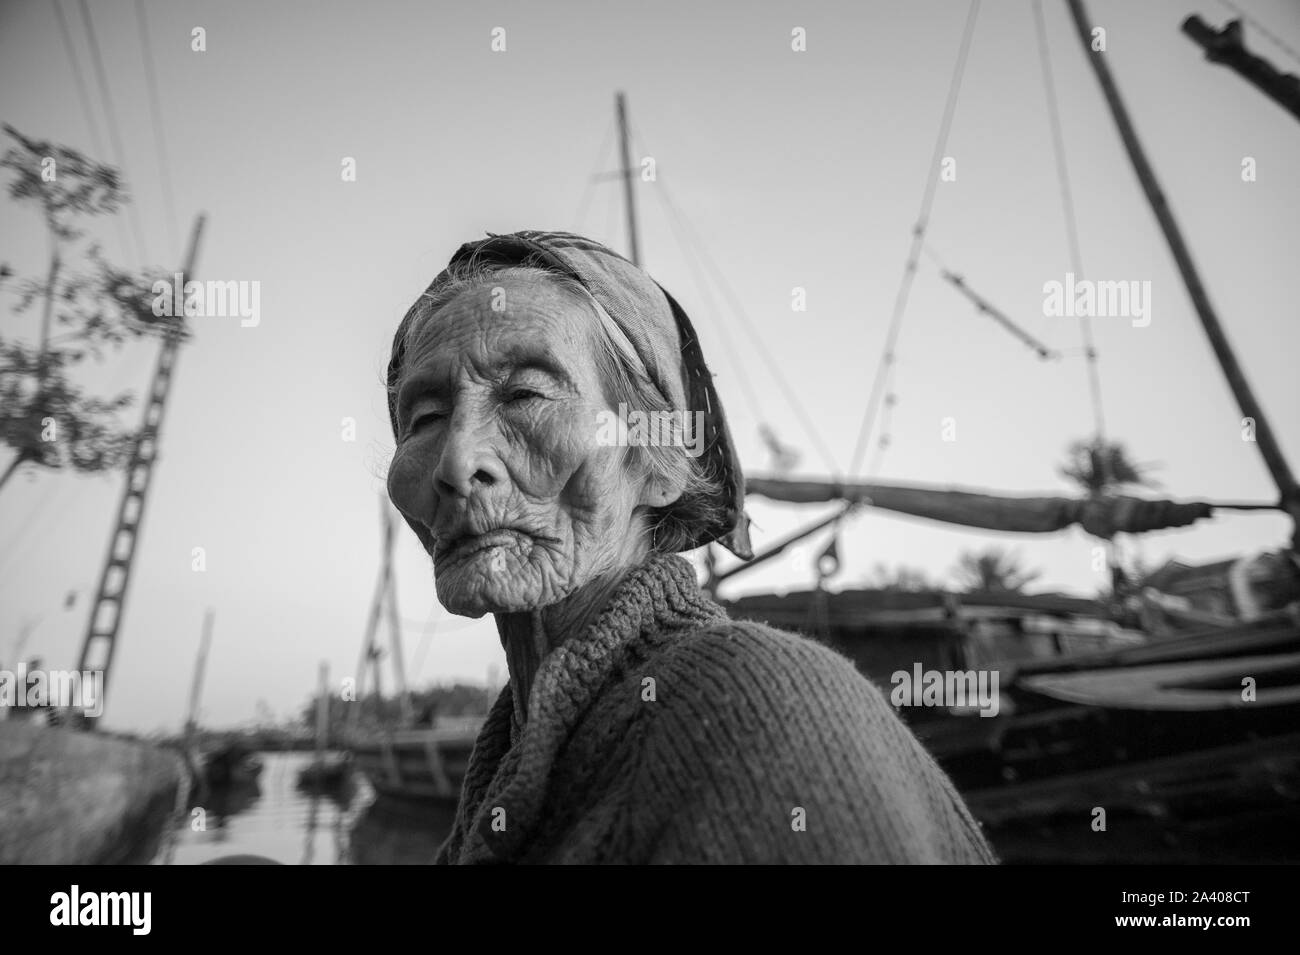 Hoi An, Provinz Quang Nam, Vietnam - Februar 24, 2011: Senior Vietnamesin mit markanten Gesichtsausdruck und faltigen Gesicht Stockfoto